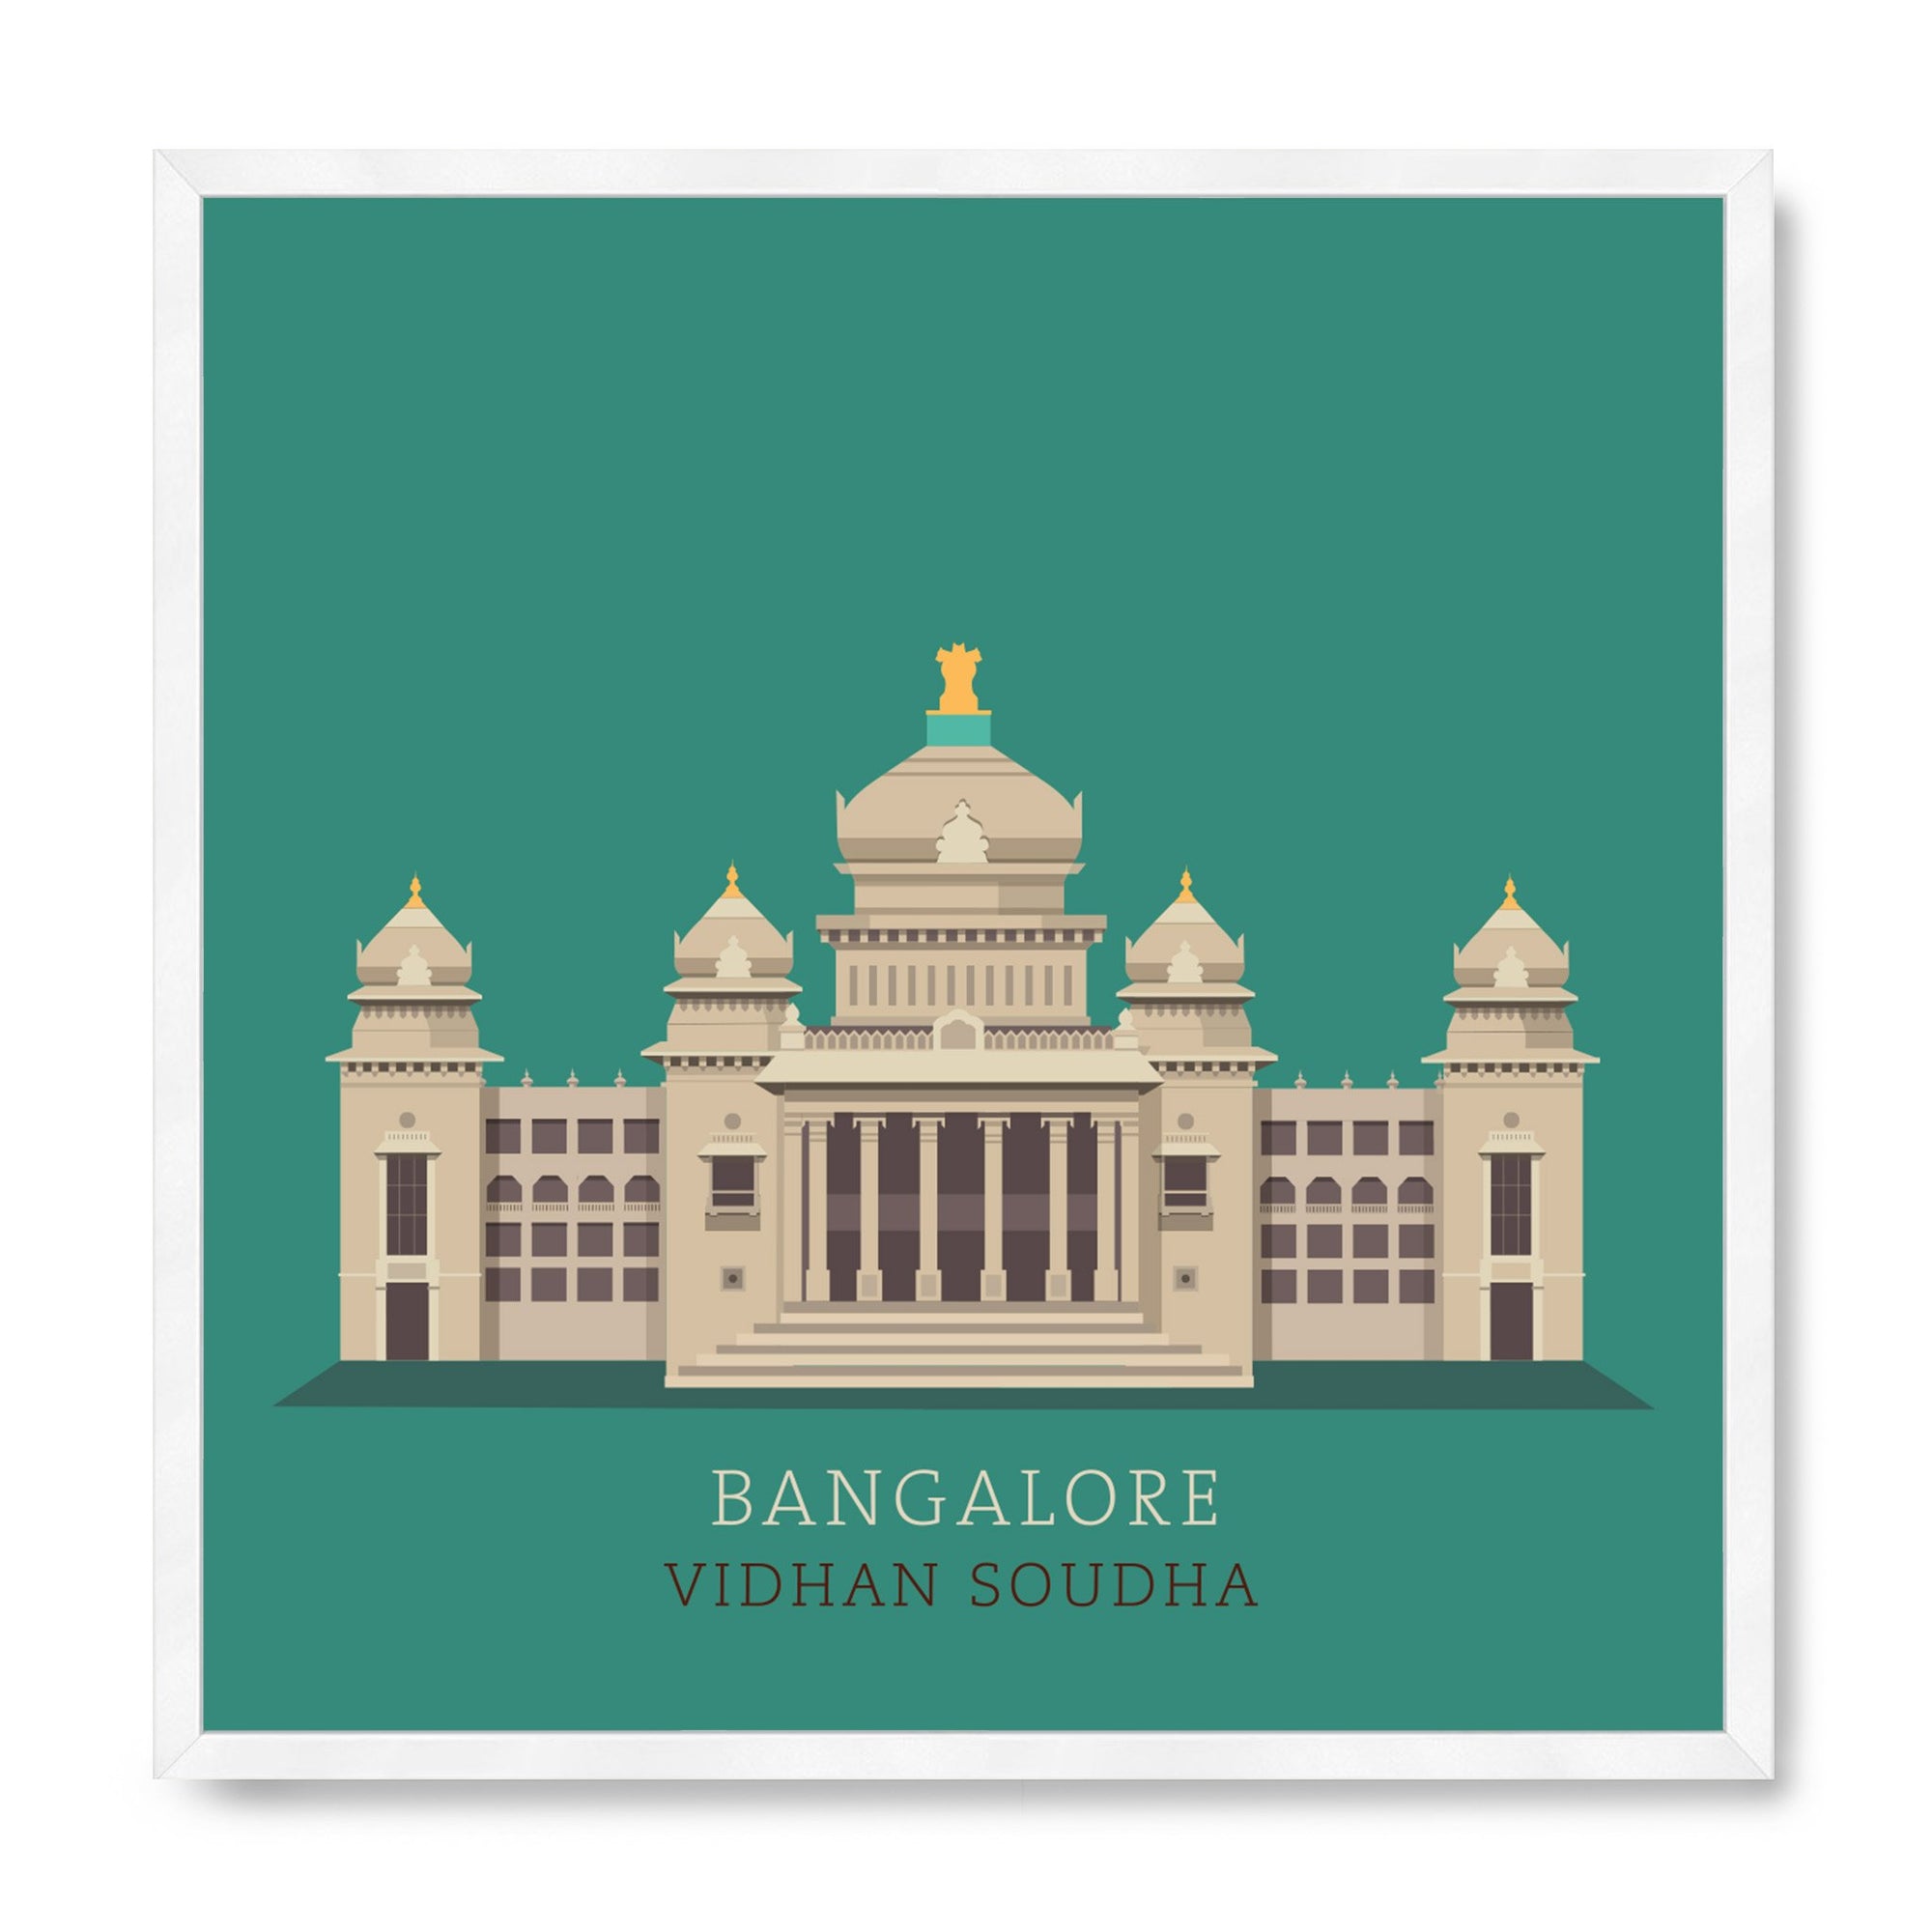 Bangalore building not bengaluru Black and White Stock Photos & Images -  Alamy